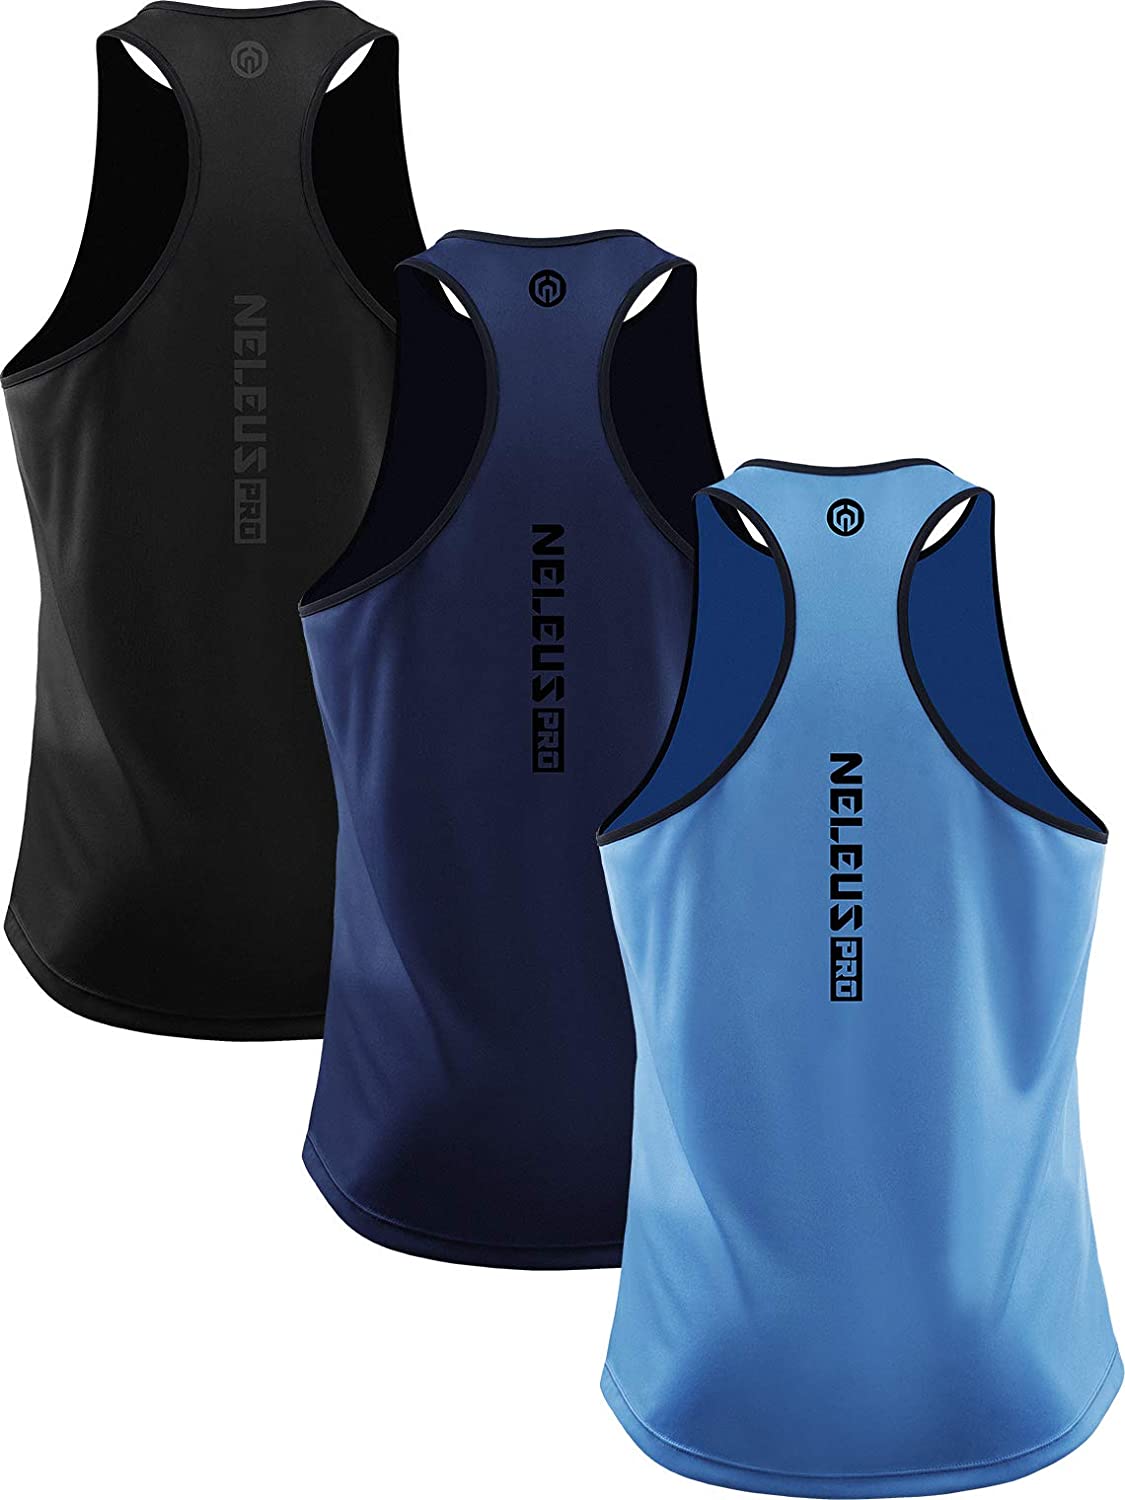 NELEUS Men's 3 Pack Workout Running Tank Top Sleeveless Gym Athletic Shirts